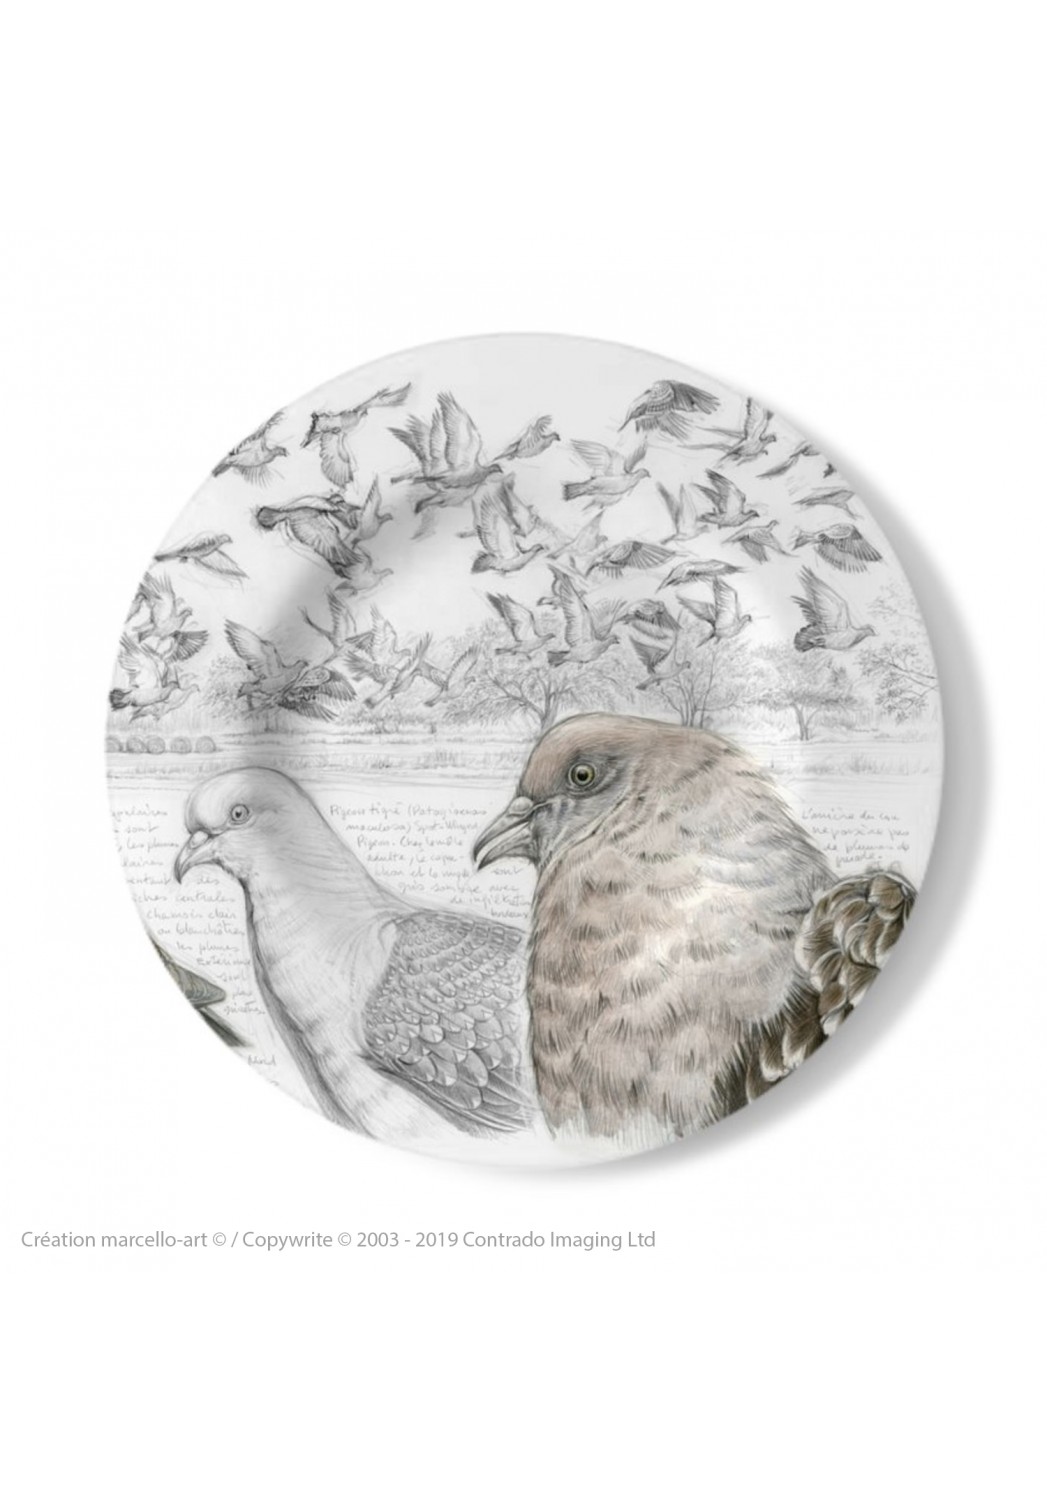 Marcello-art: Decorating Plates Decoration plates 232 Spot-winged Pigeon